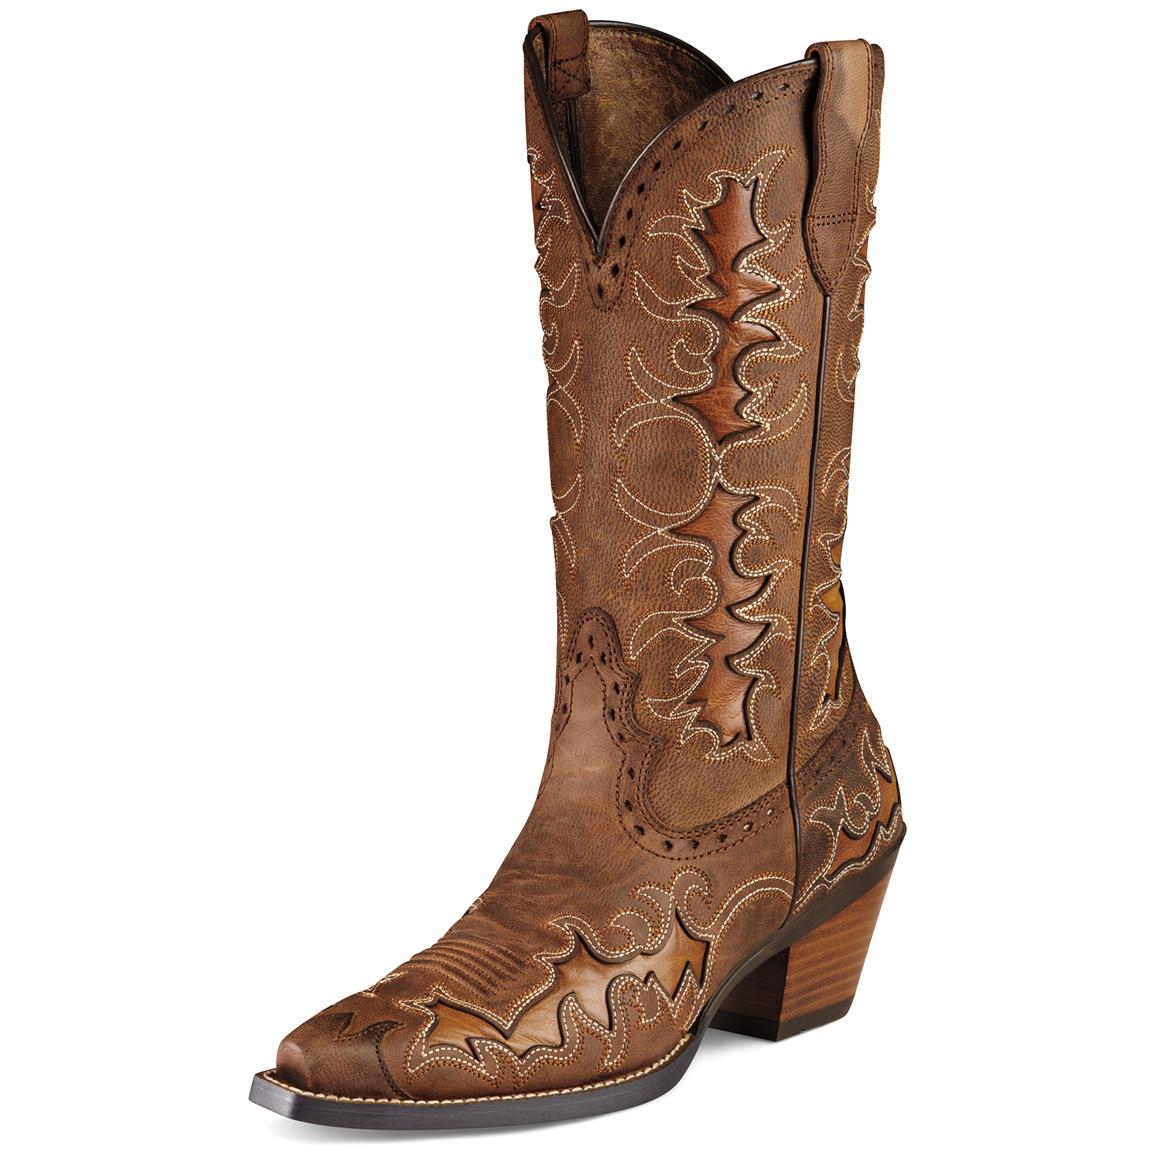 Images Of Cowboy Boots - ClipArt Best